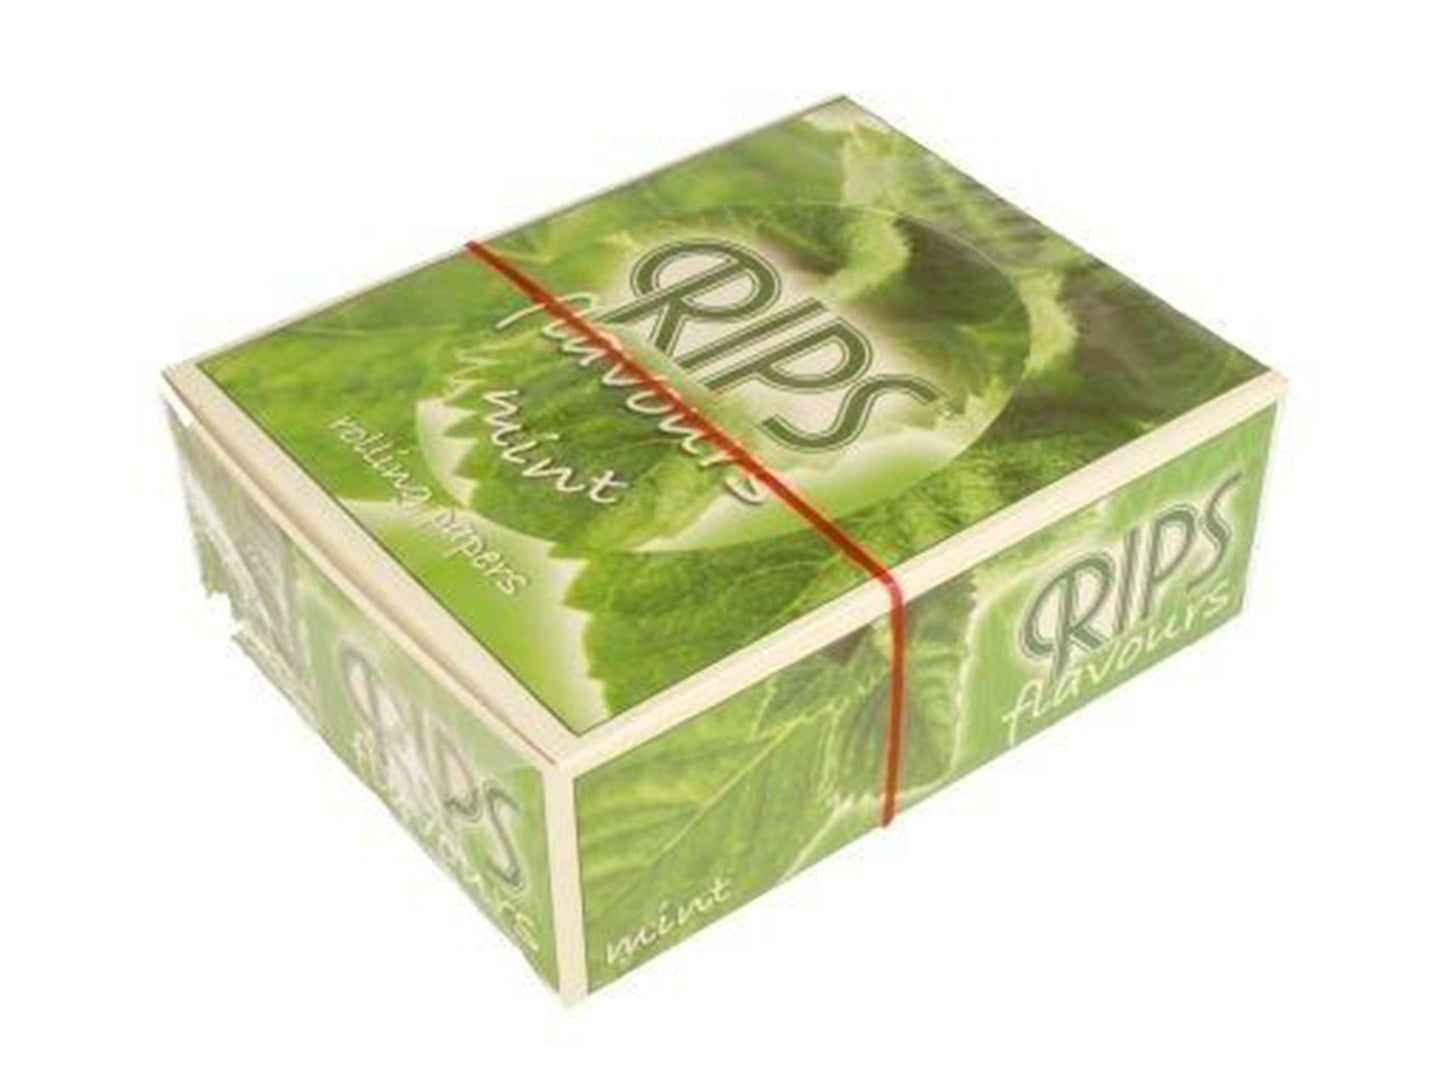 RIPS Mint Flavoured 4m Slim Rolls - 24 Per Box - VIR Wholesale